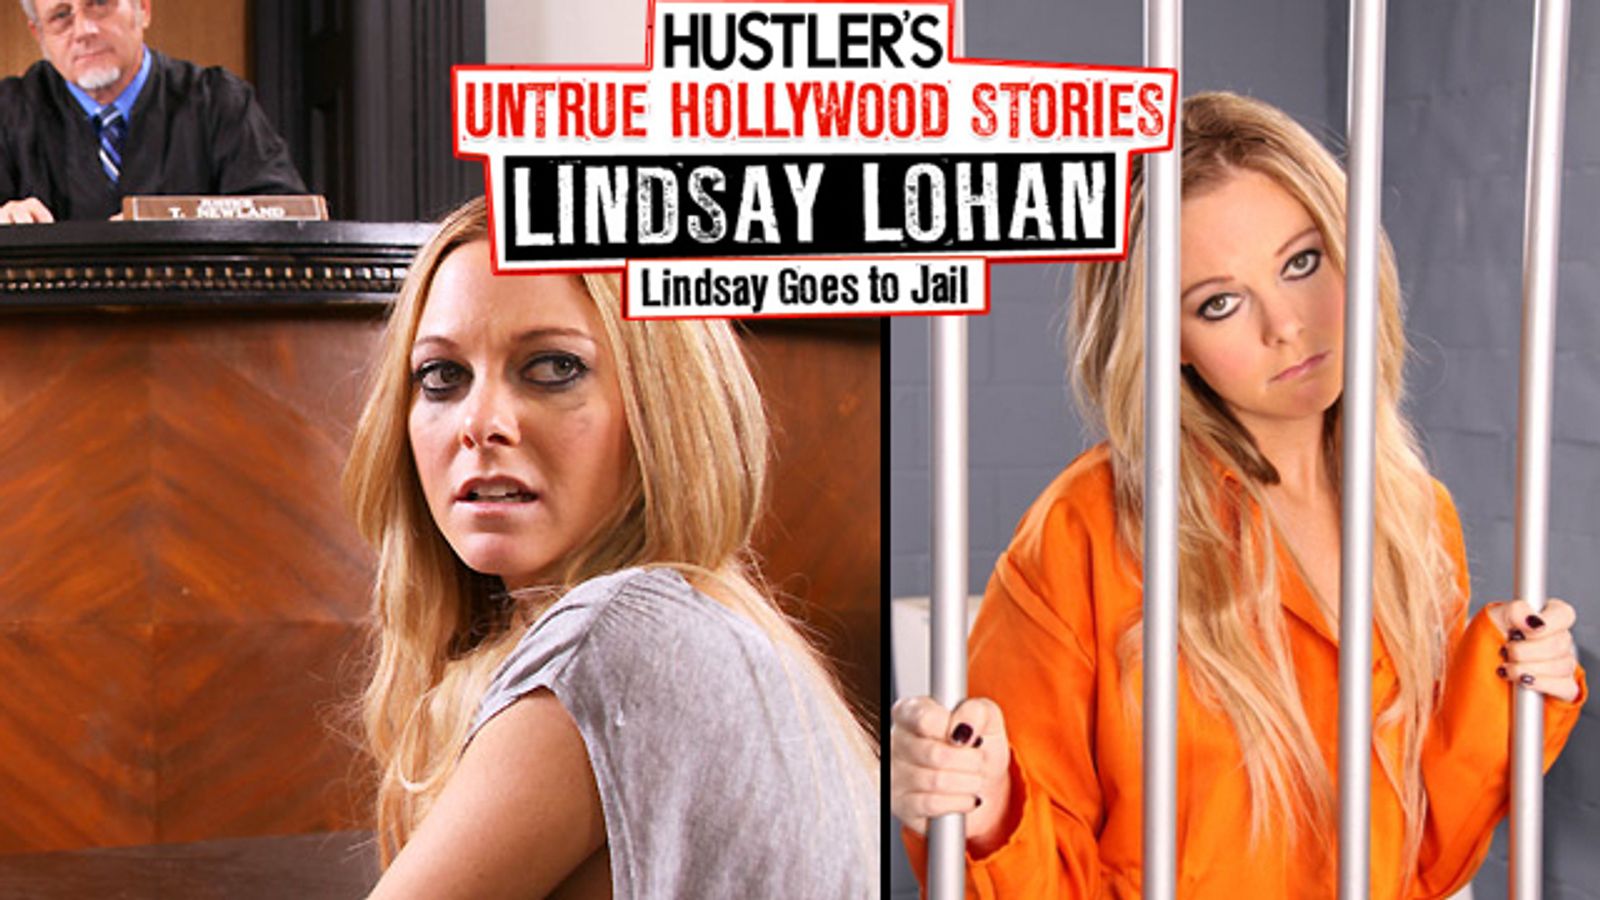 Hustler Video Goes to Jail with Lindsay Lohan